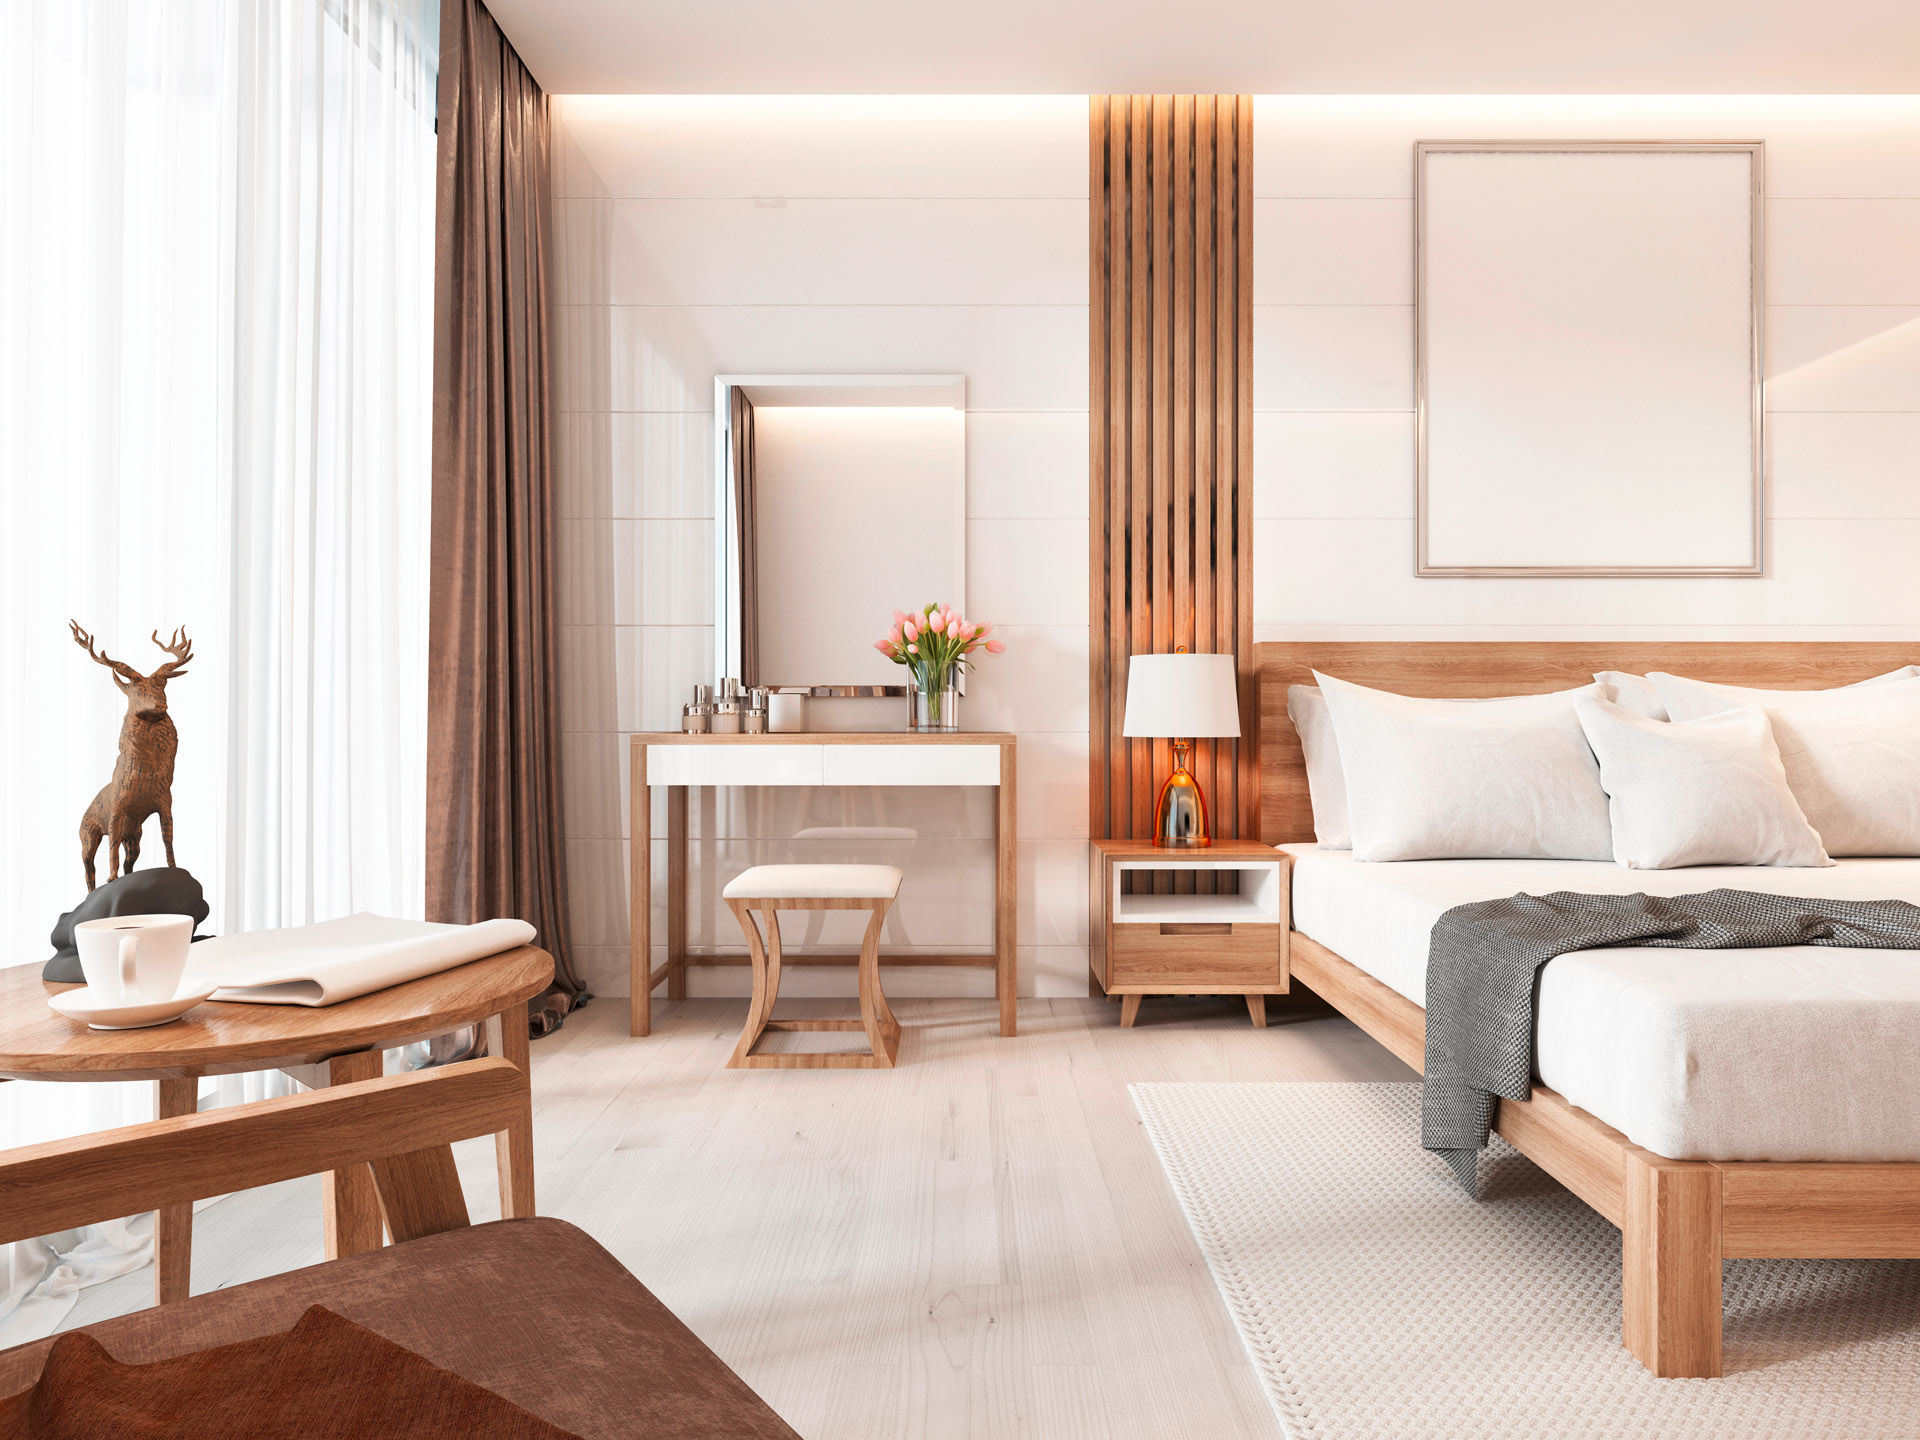 Modern light bedroom with wooden furniture in Scandinavian style. 3D rendering